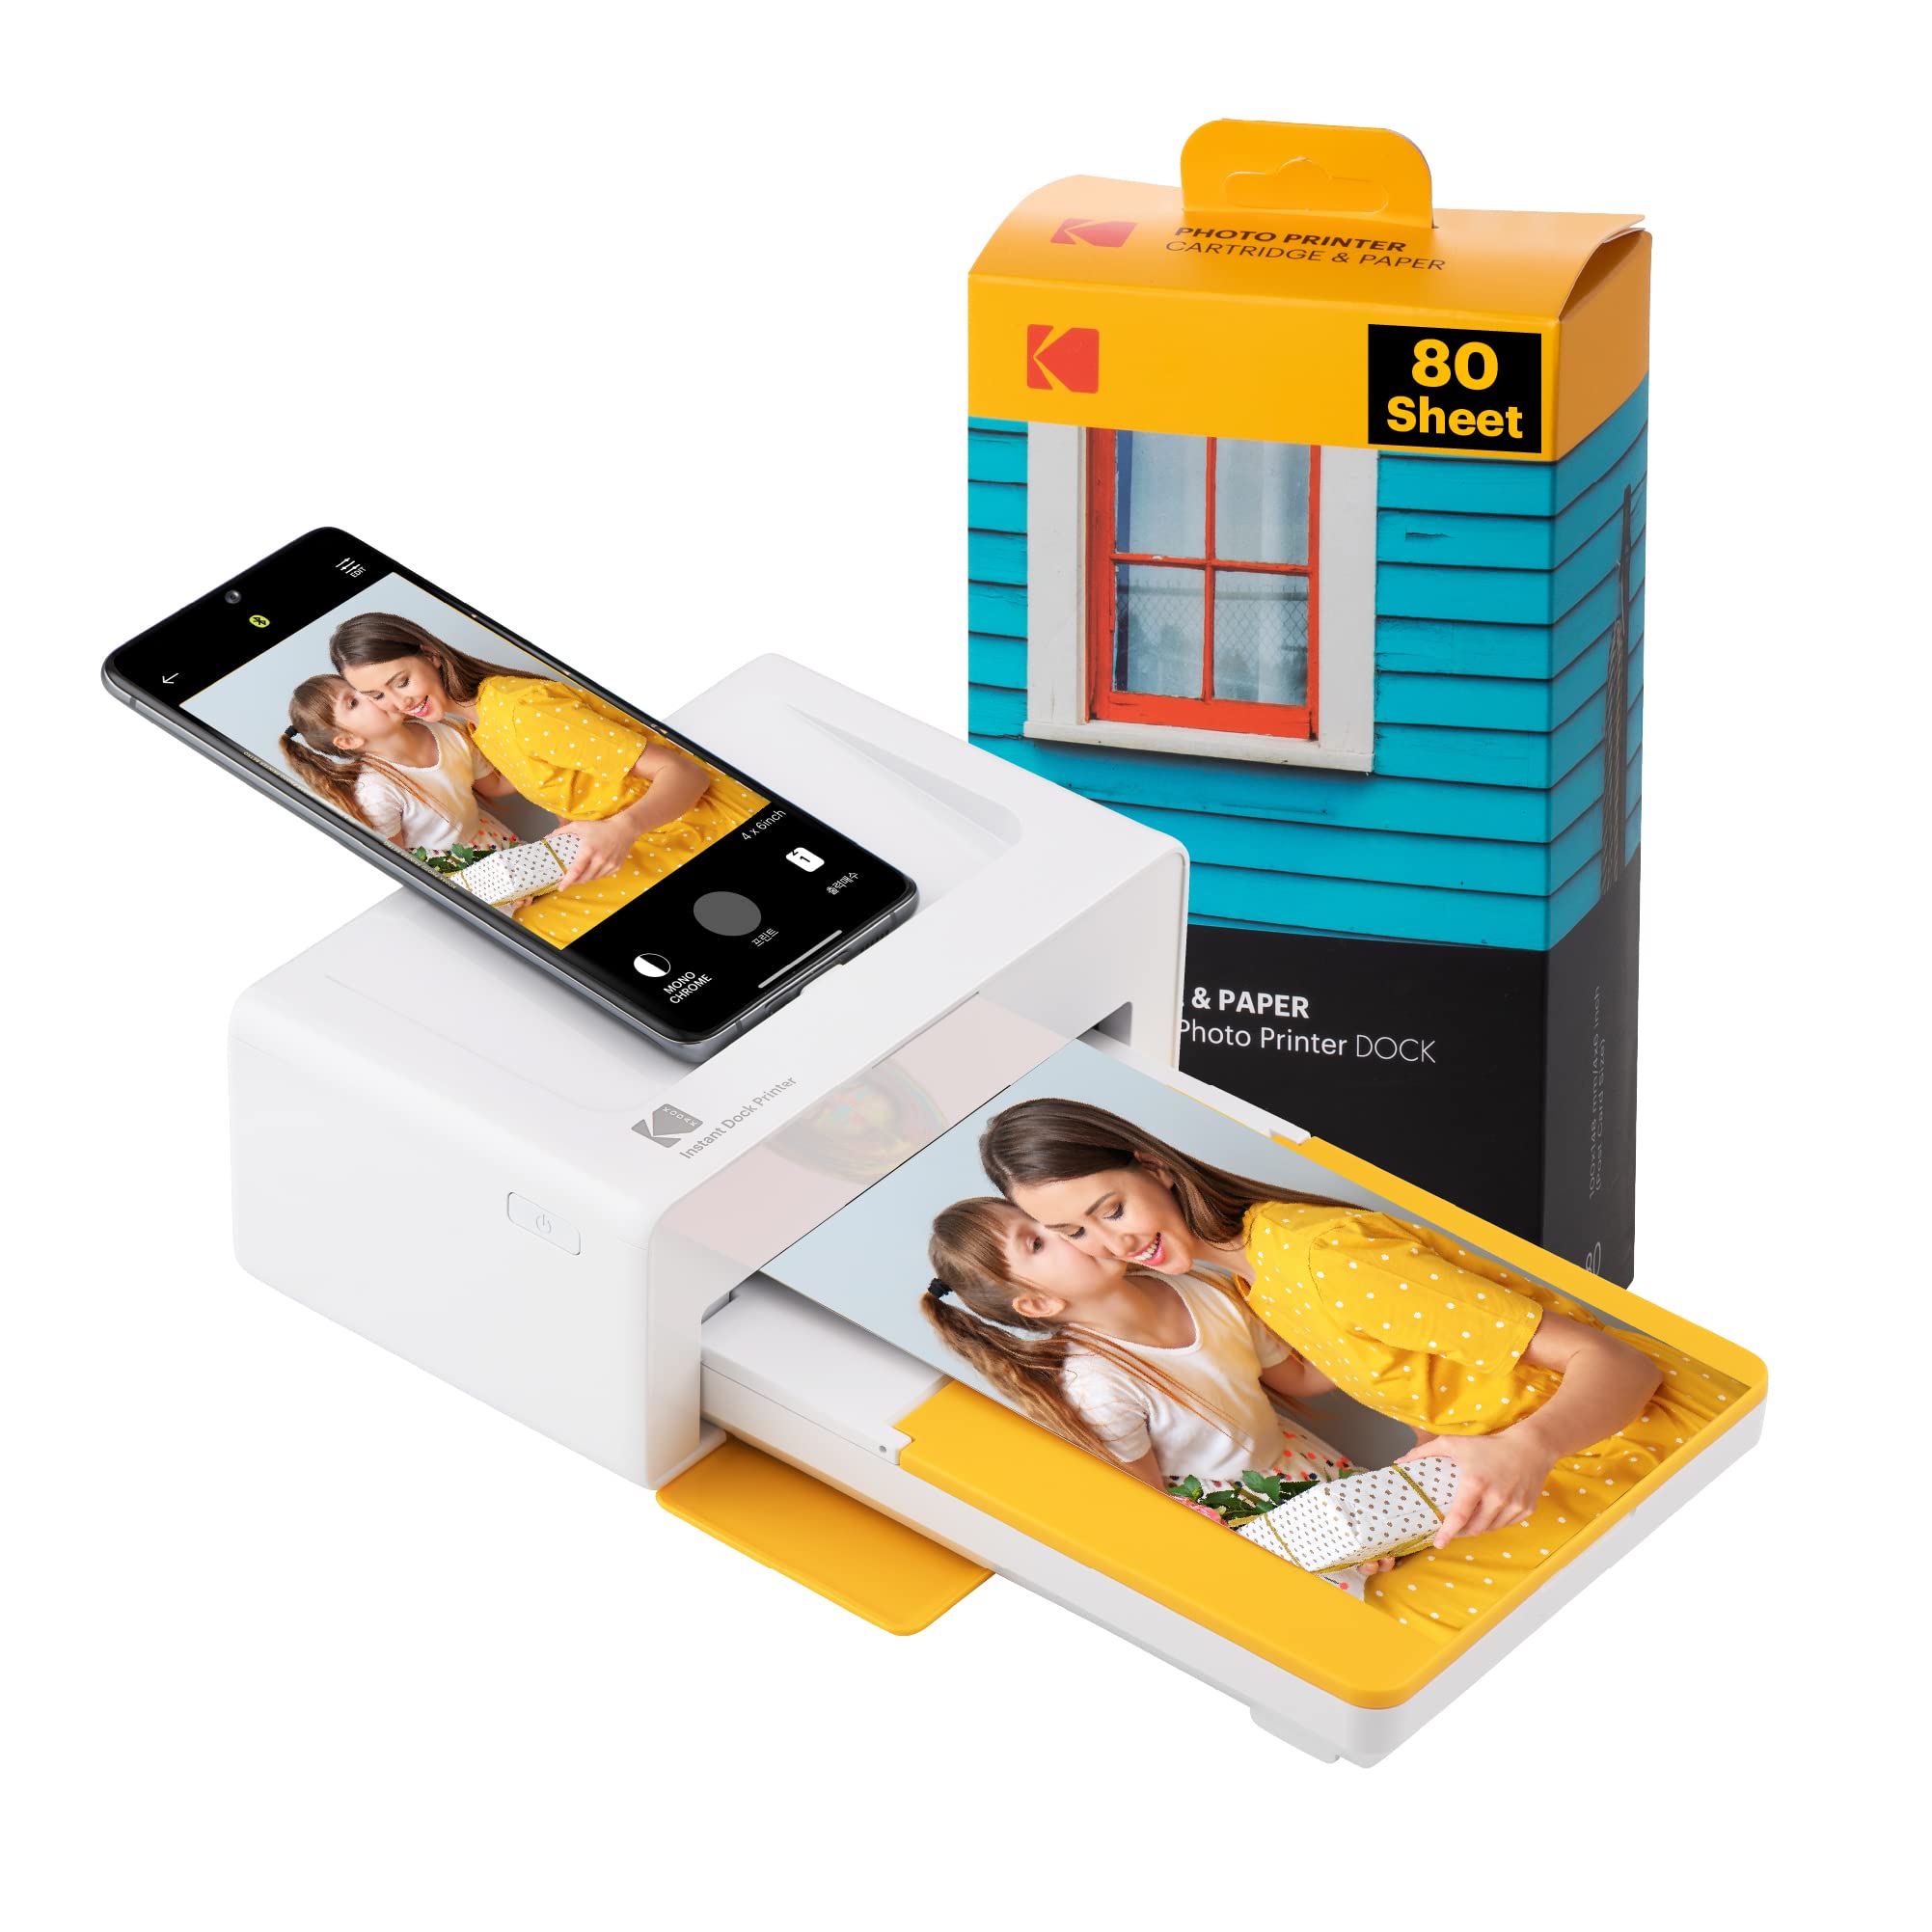 KODAK Dock Plus 4PASS Instant Photo Printer (4x6 inches) + 90 Sheets Bundle (10 Initial Sheets + 80 Sheet Pack) $125.98